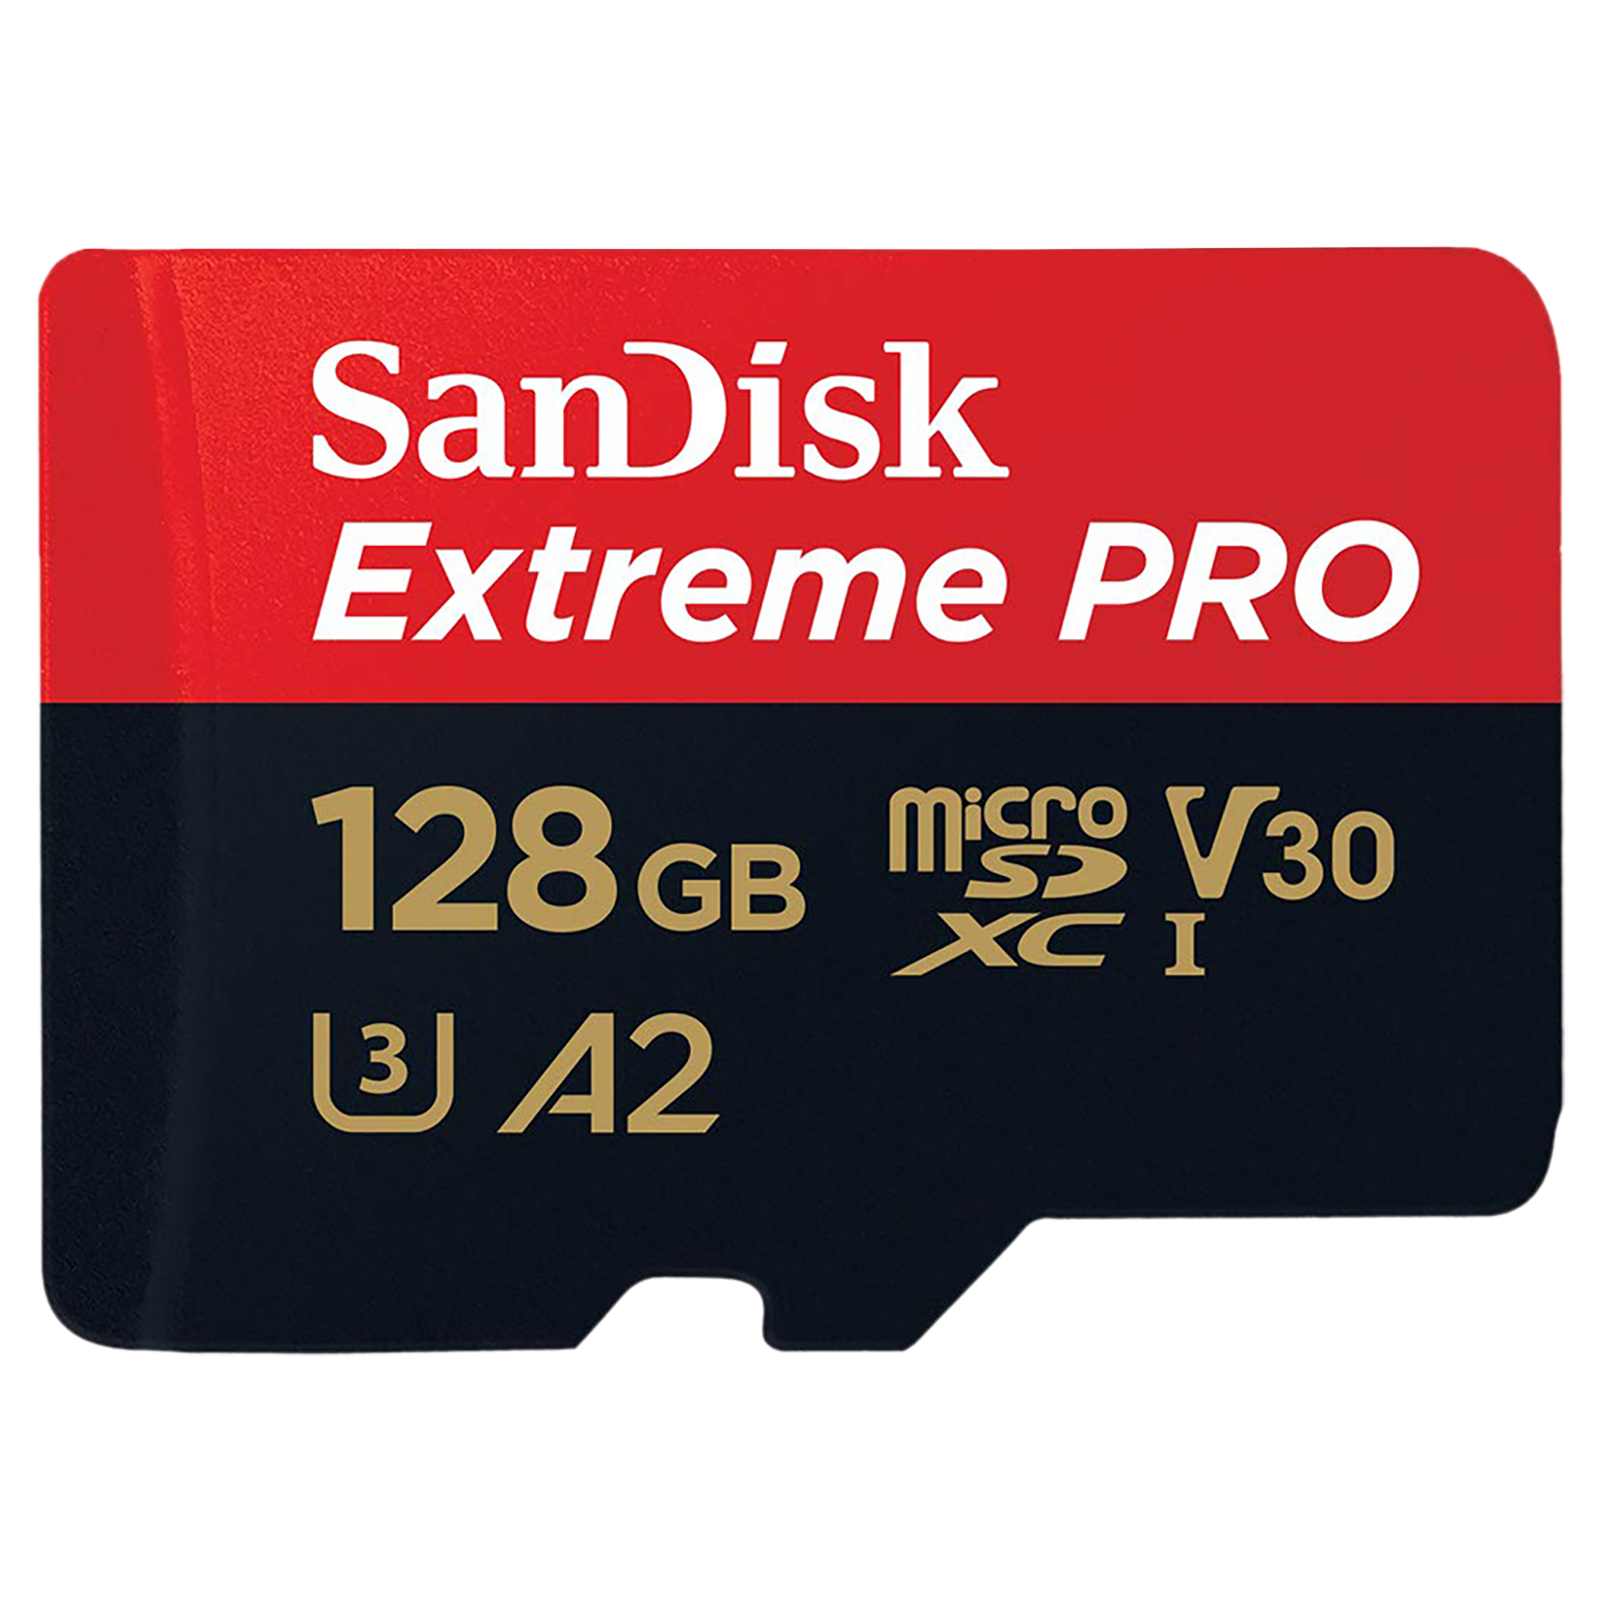 SanDisk Extreme Pro MicroSDXC 128GB Class 3 200MB/s Memory Card